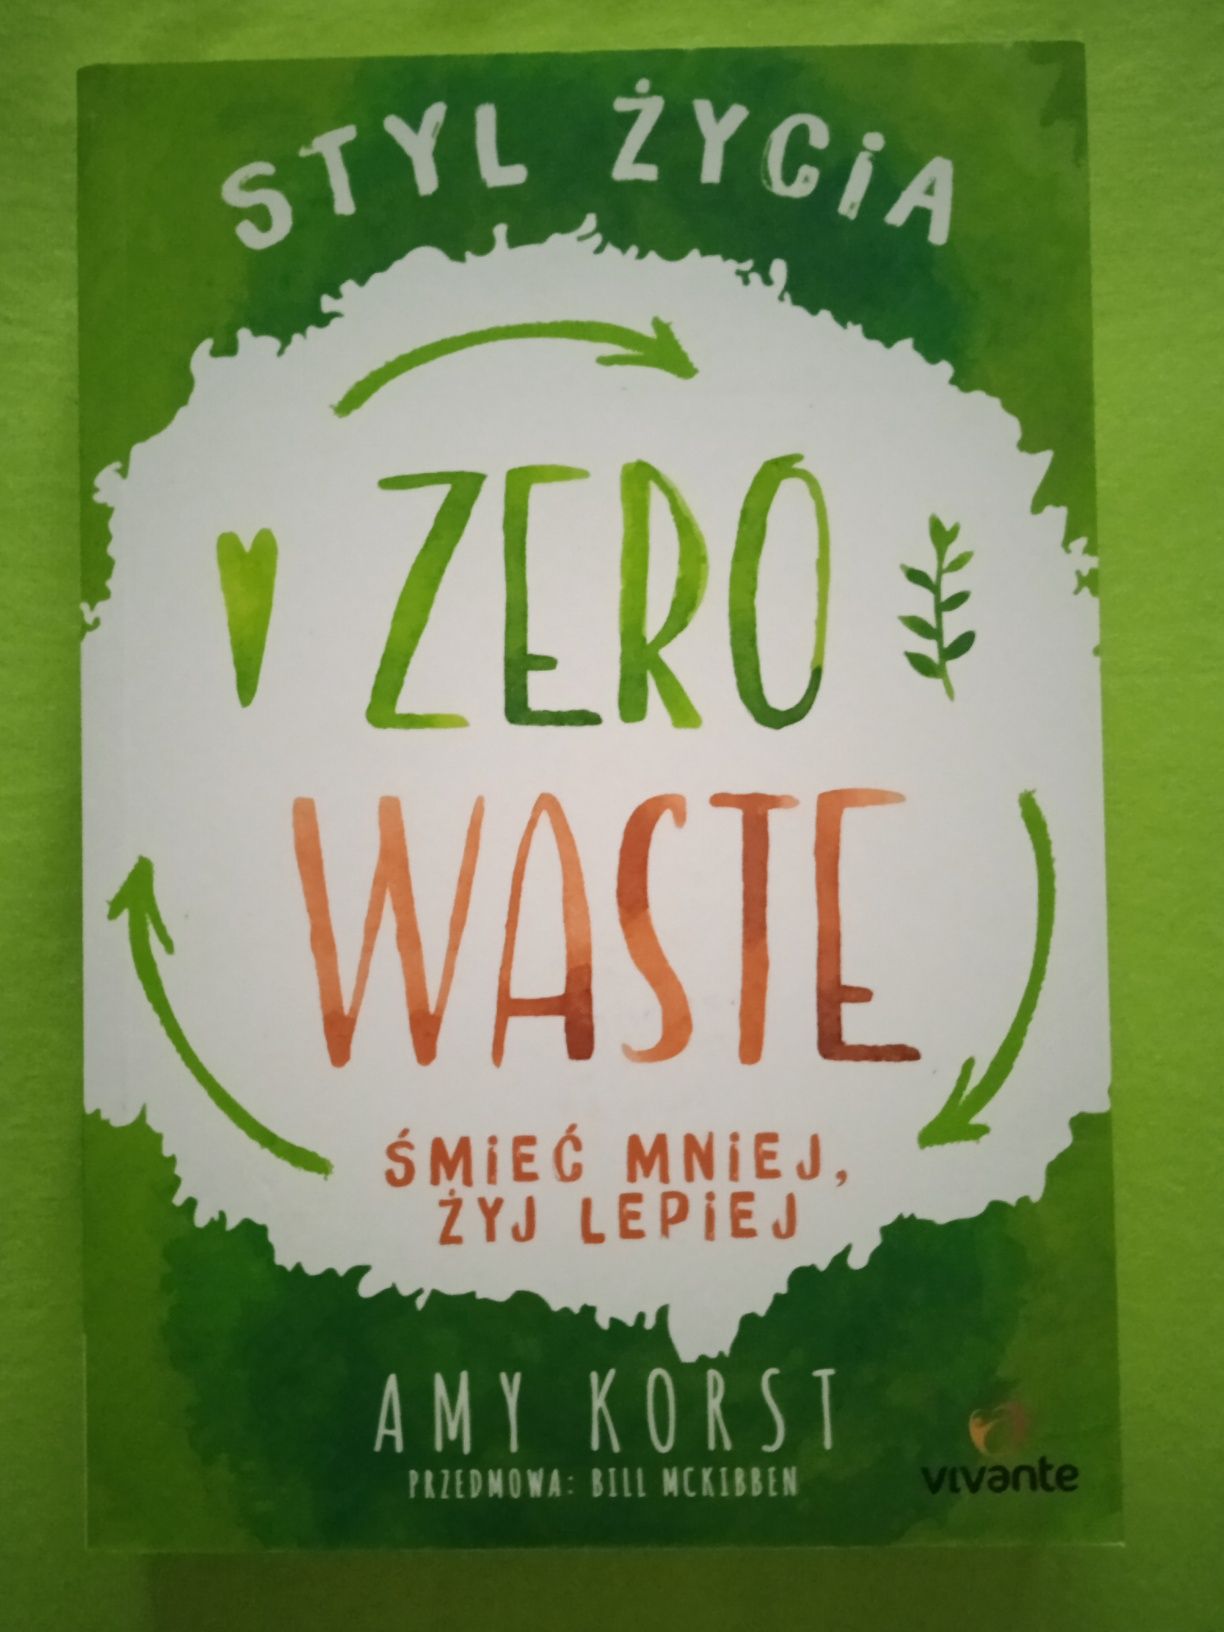 Zero waste - Amy Korst